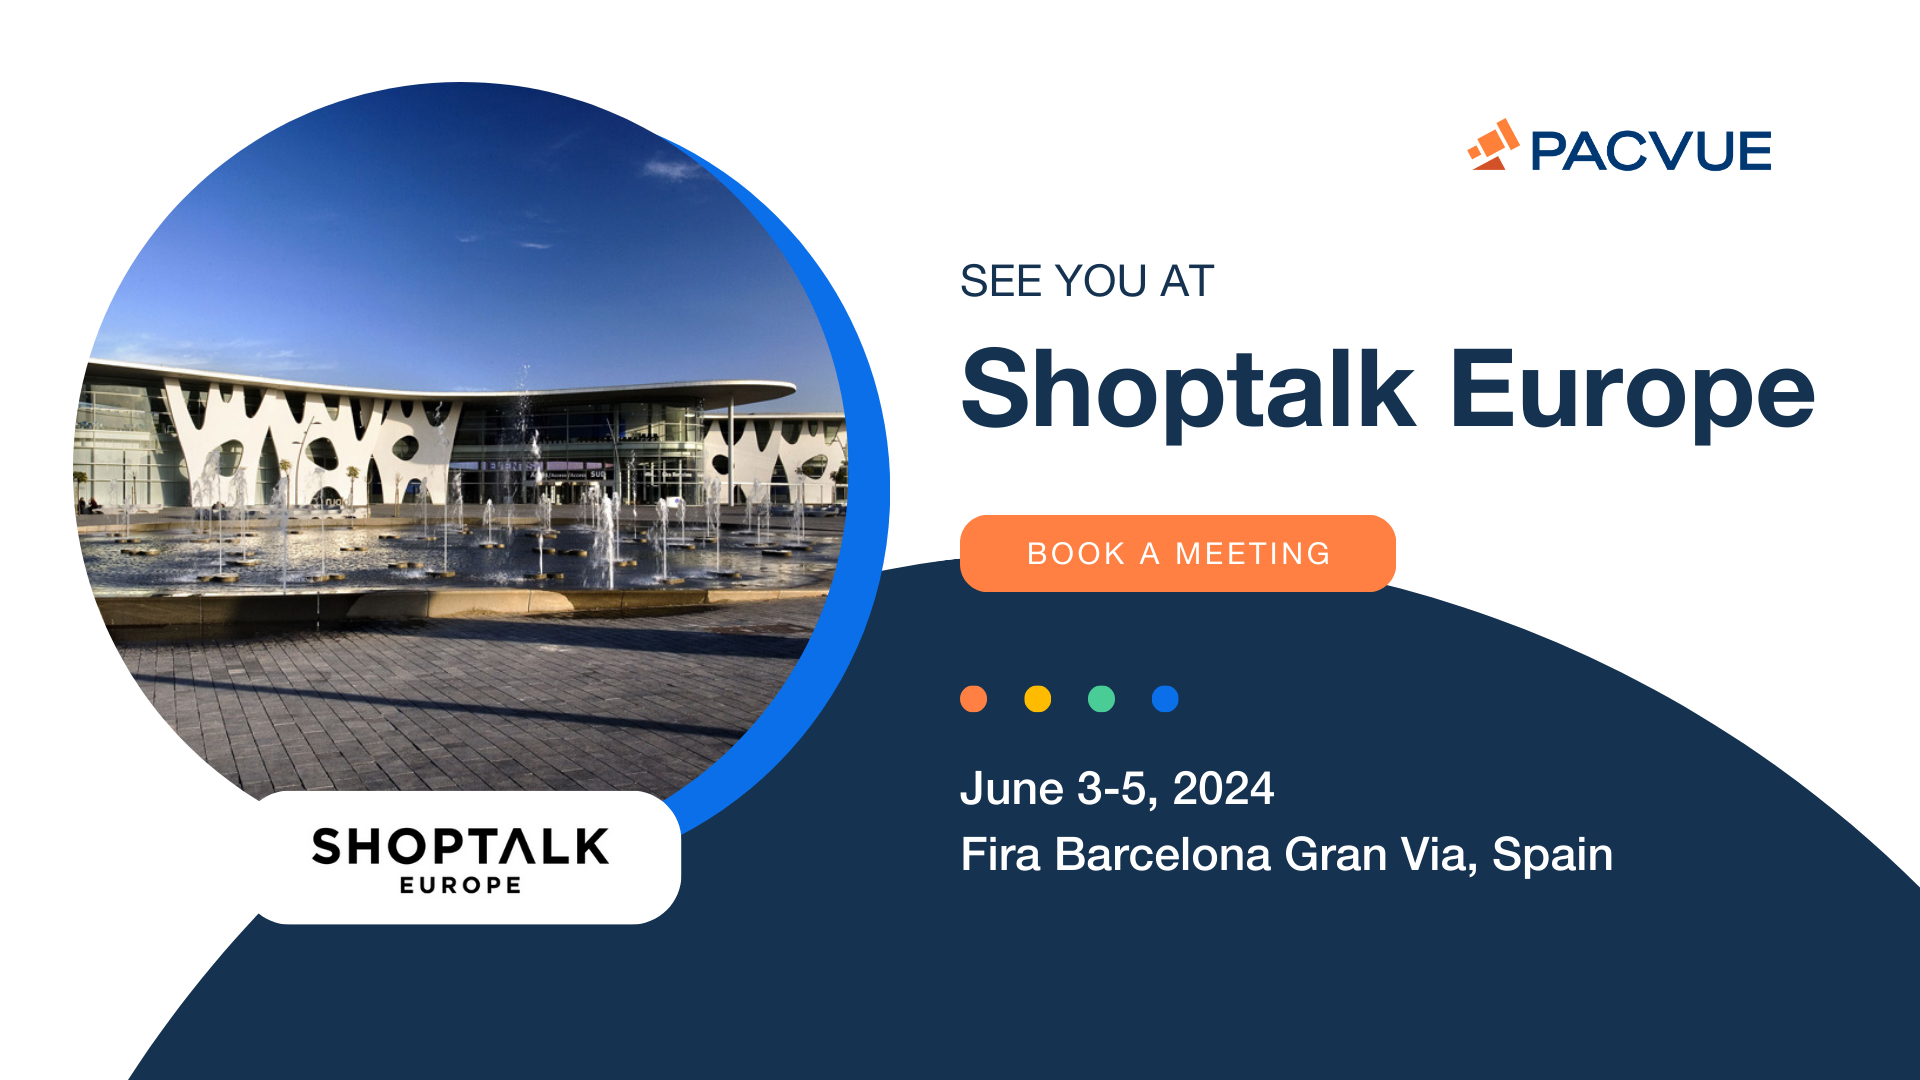 Pacvue à Shoptalk Europe du 3 au 5 juin 2024 à Barcelone